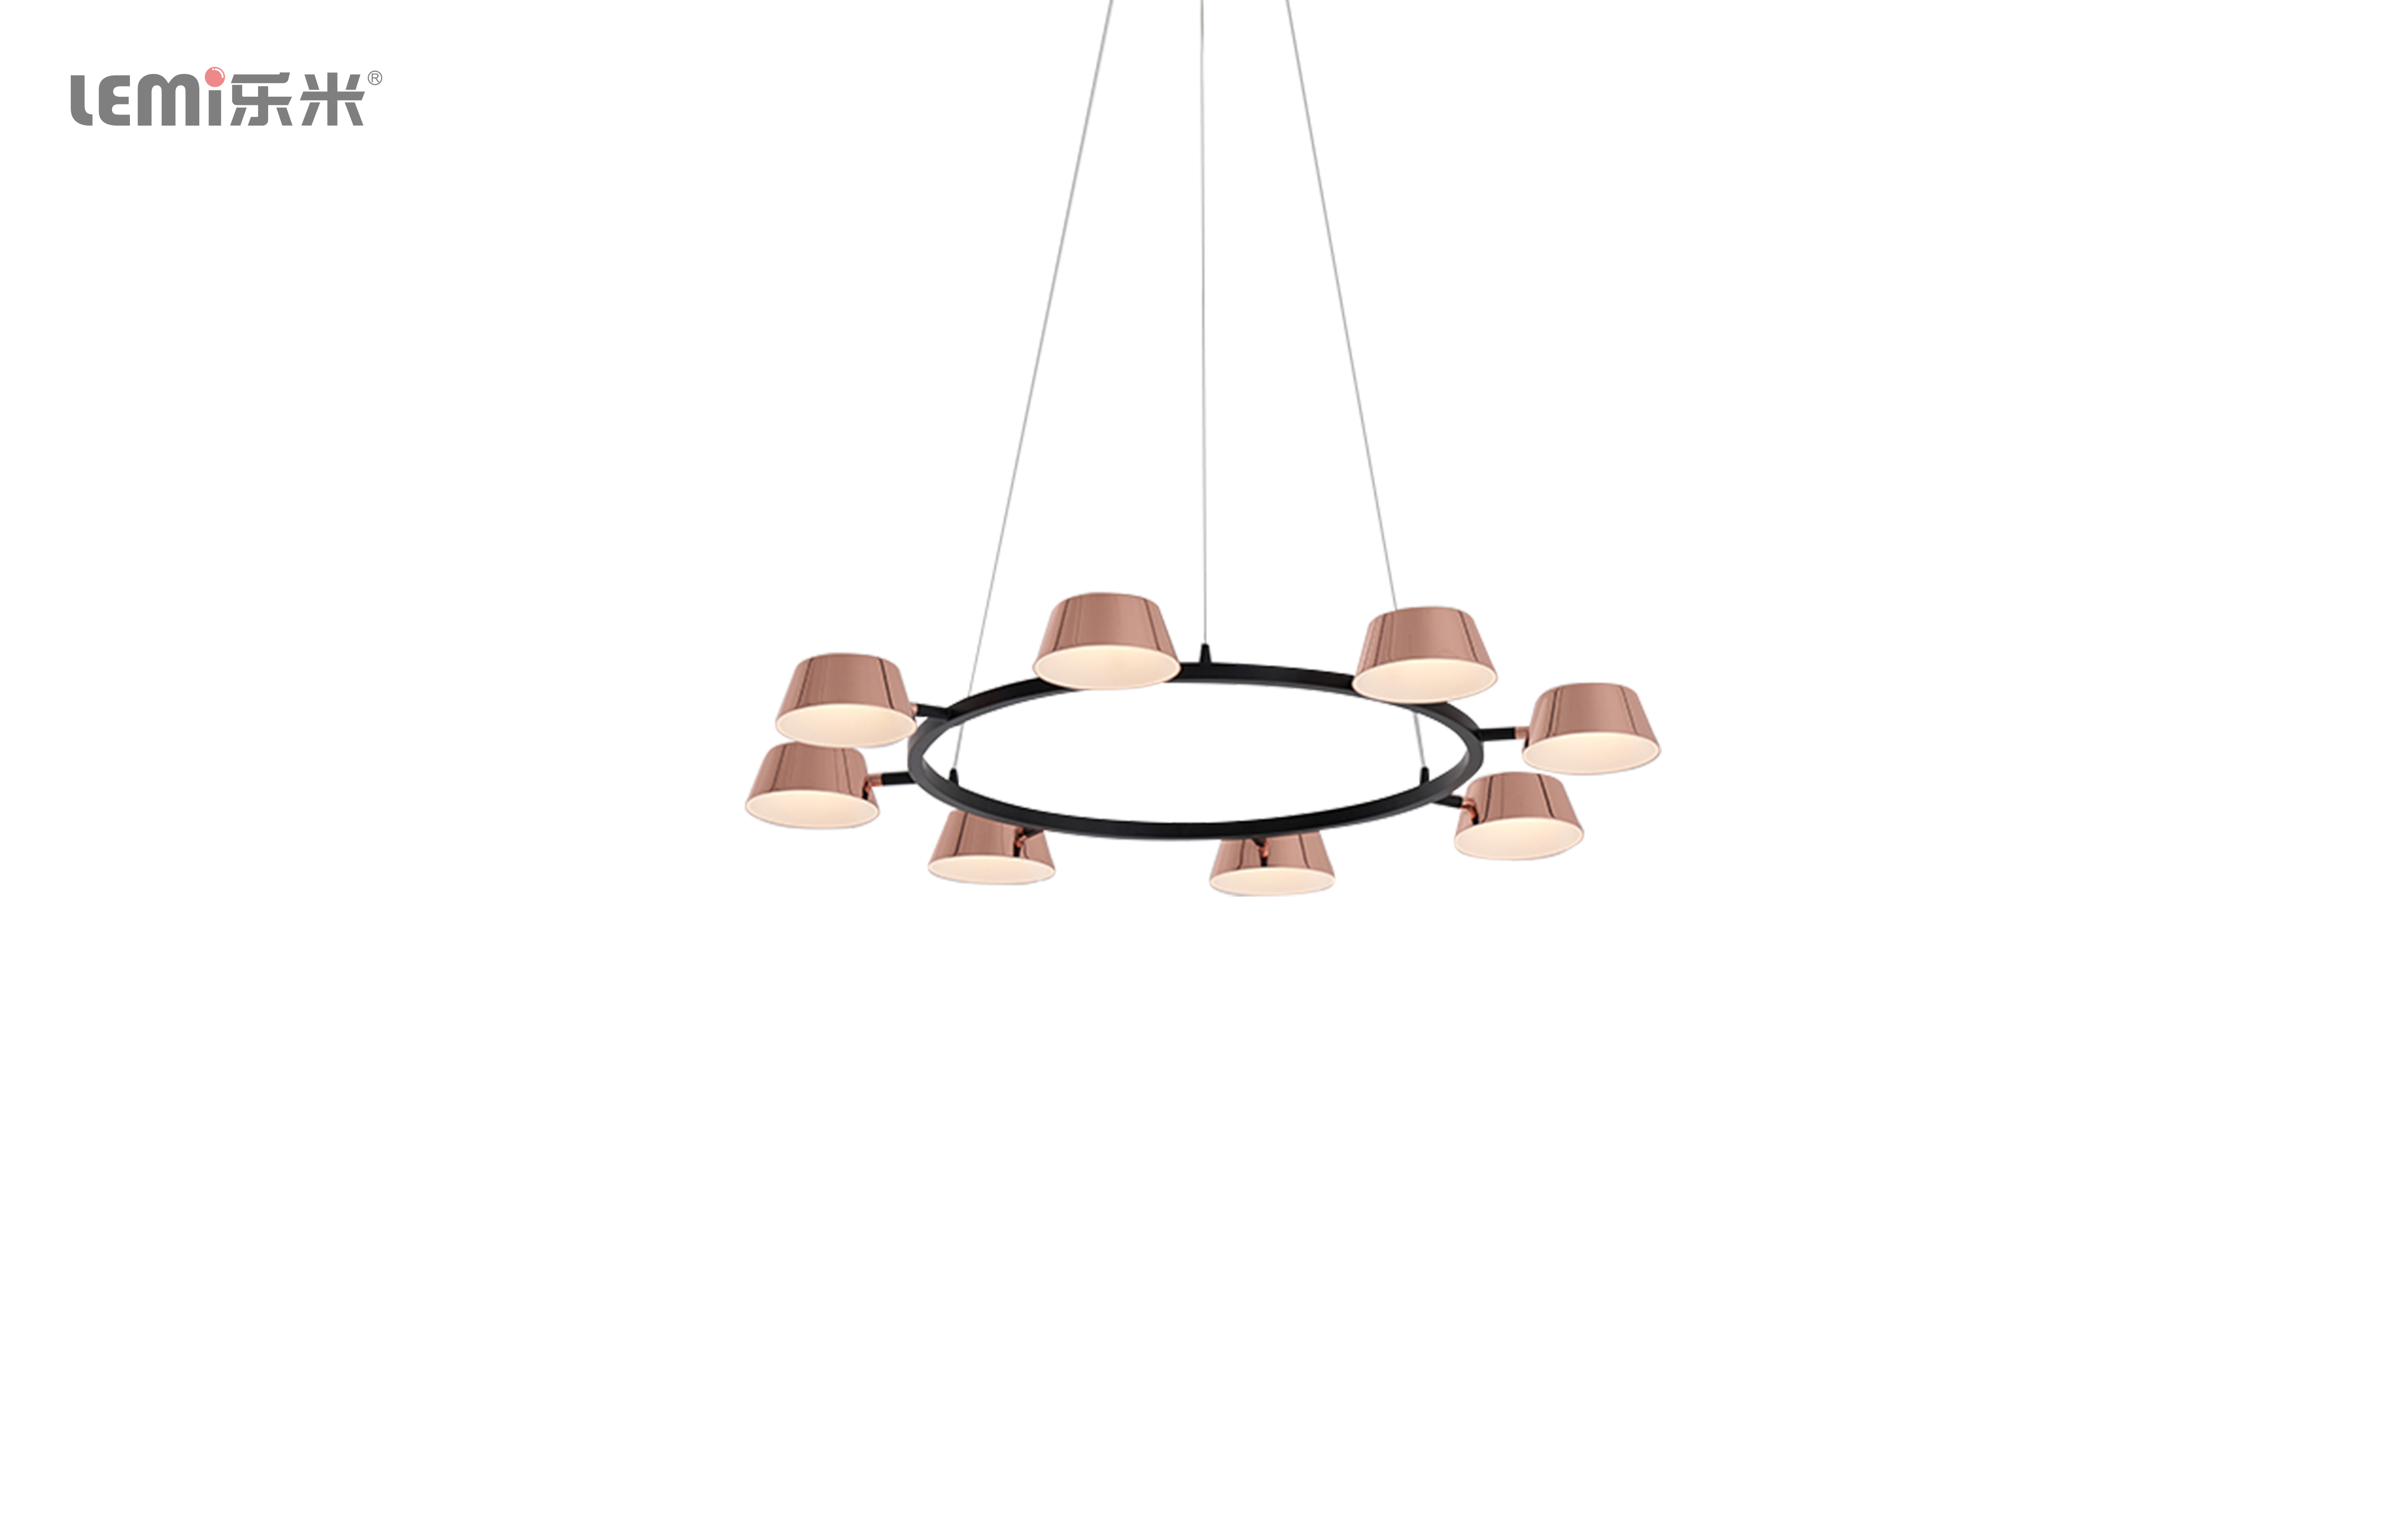 Lemi dream chandelier series